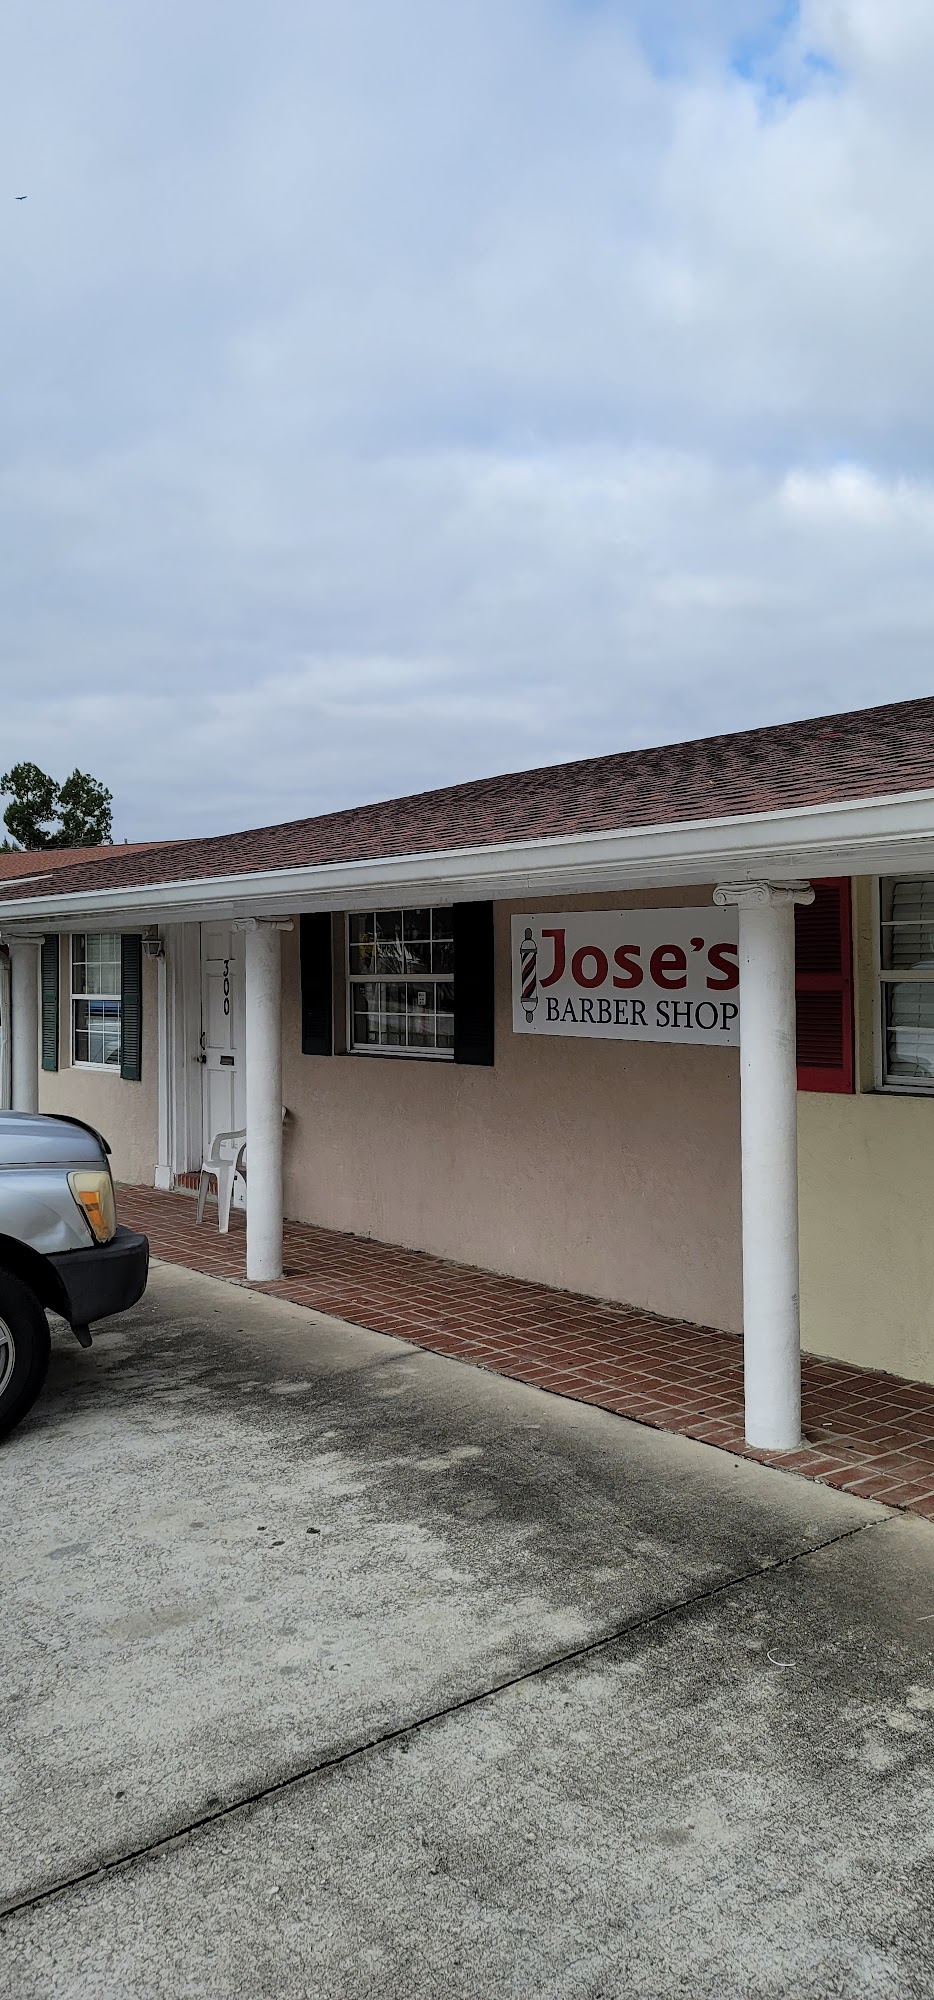 Jose's Barber Shop